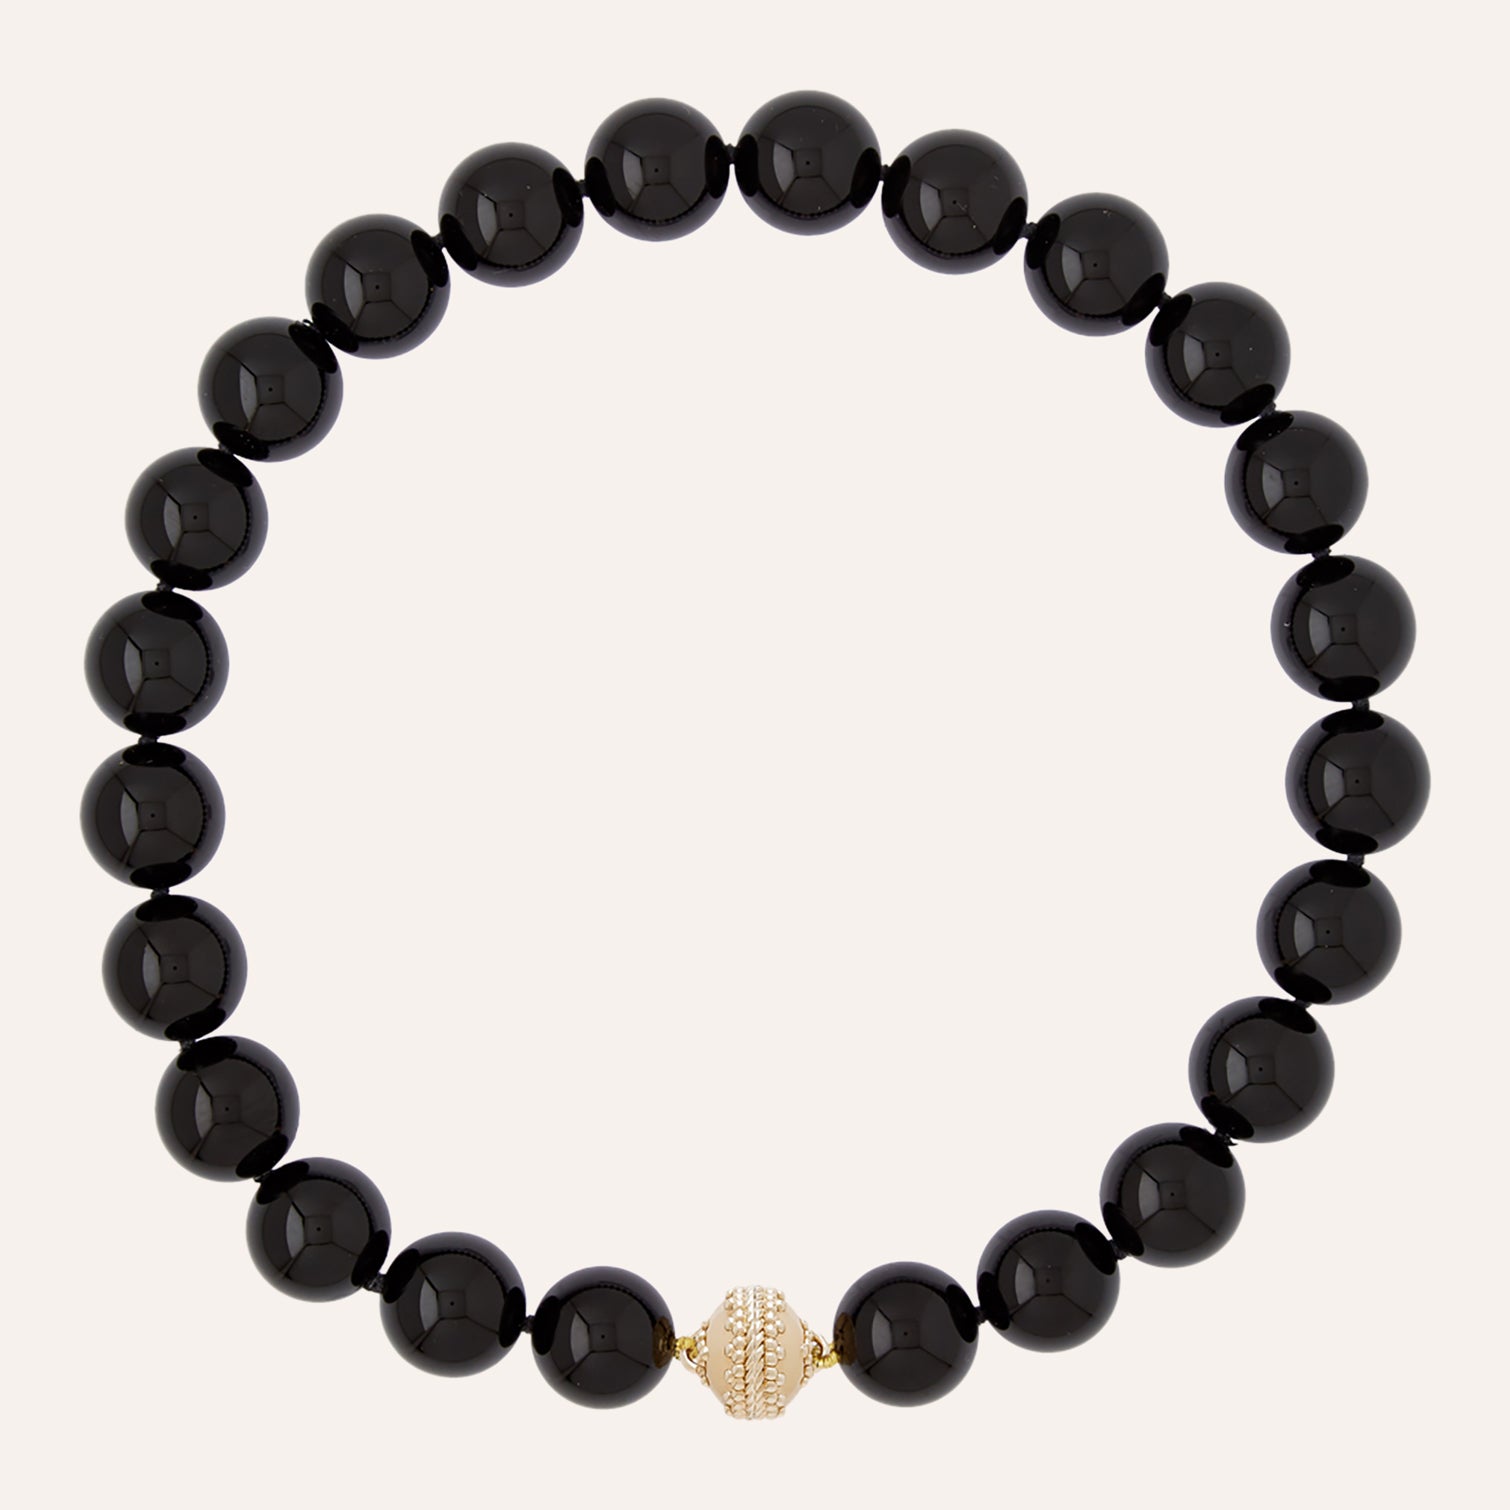 Victoire Black Onyx 16mm Necklace